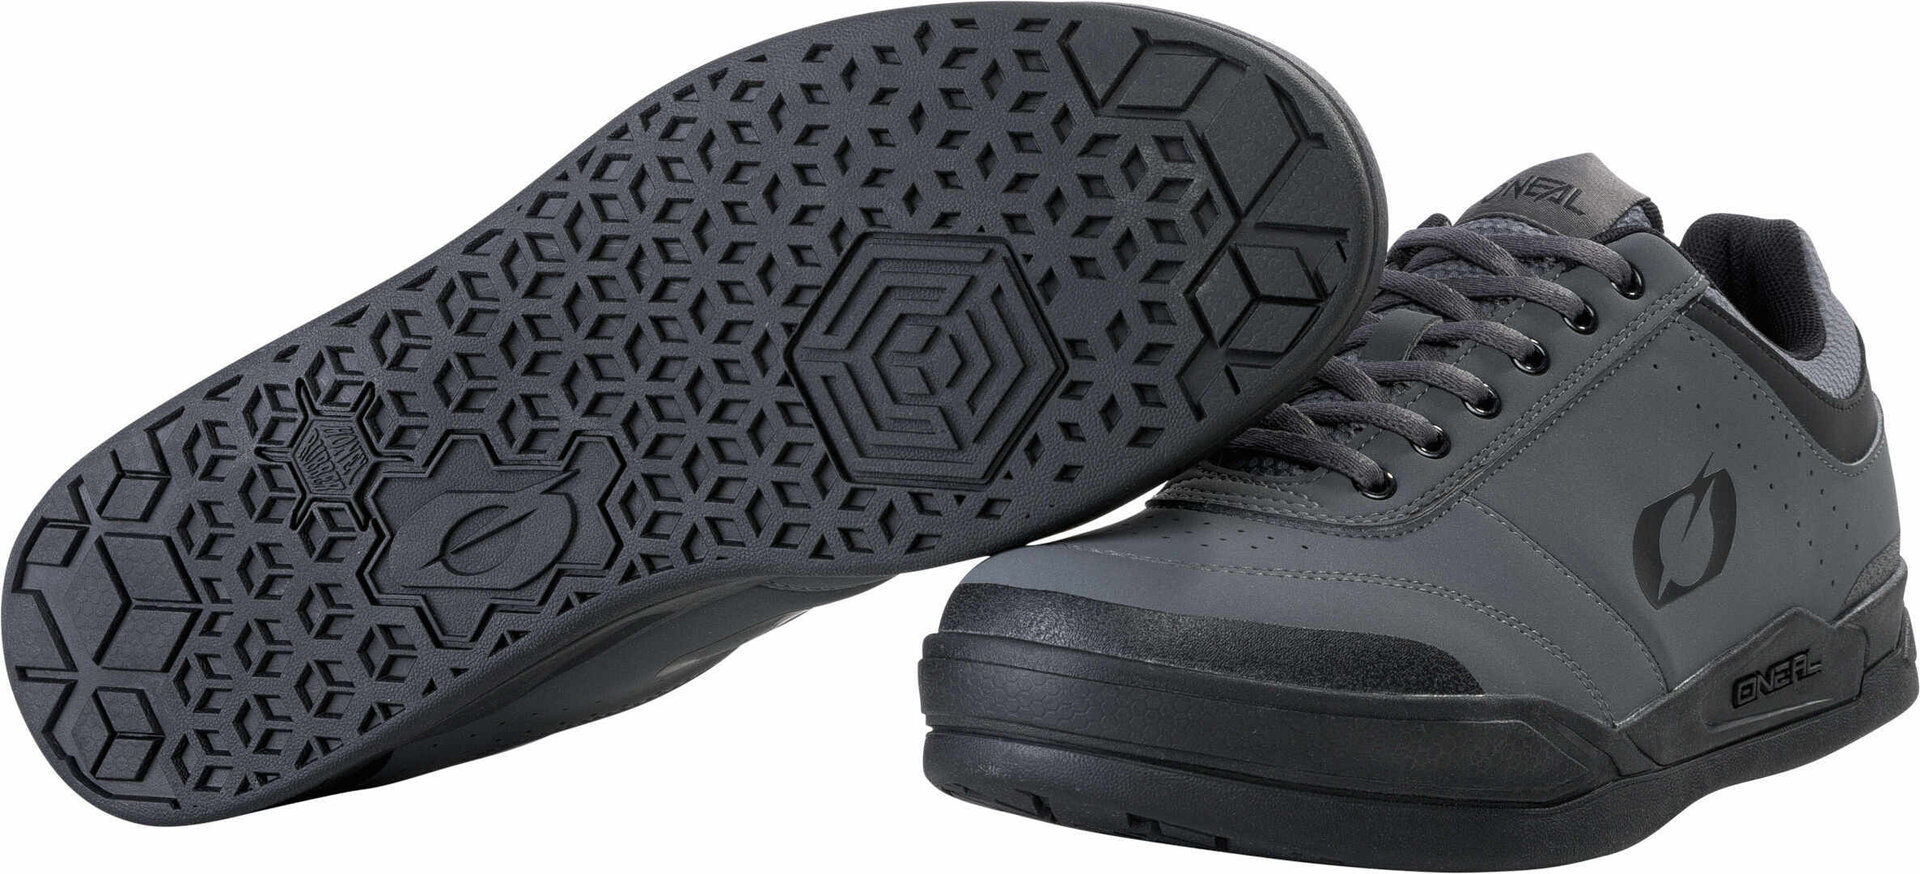 Oneal Pumps Flat Chaussures Noir Gris 44